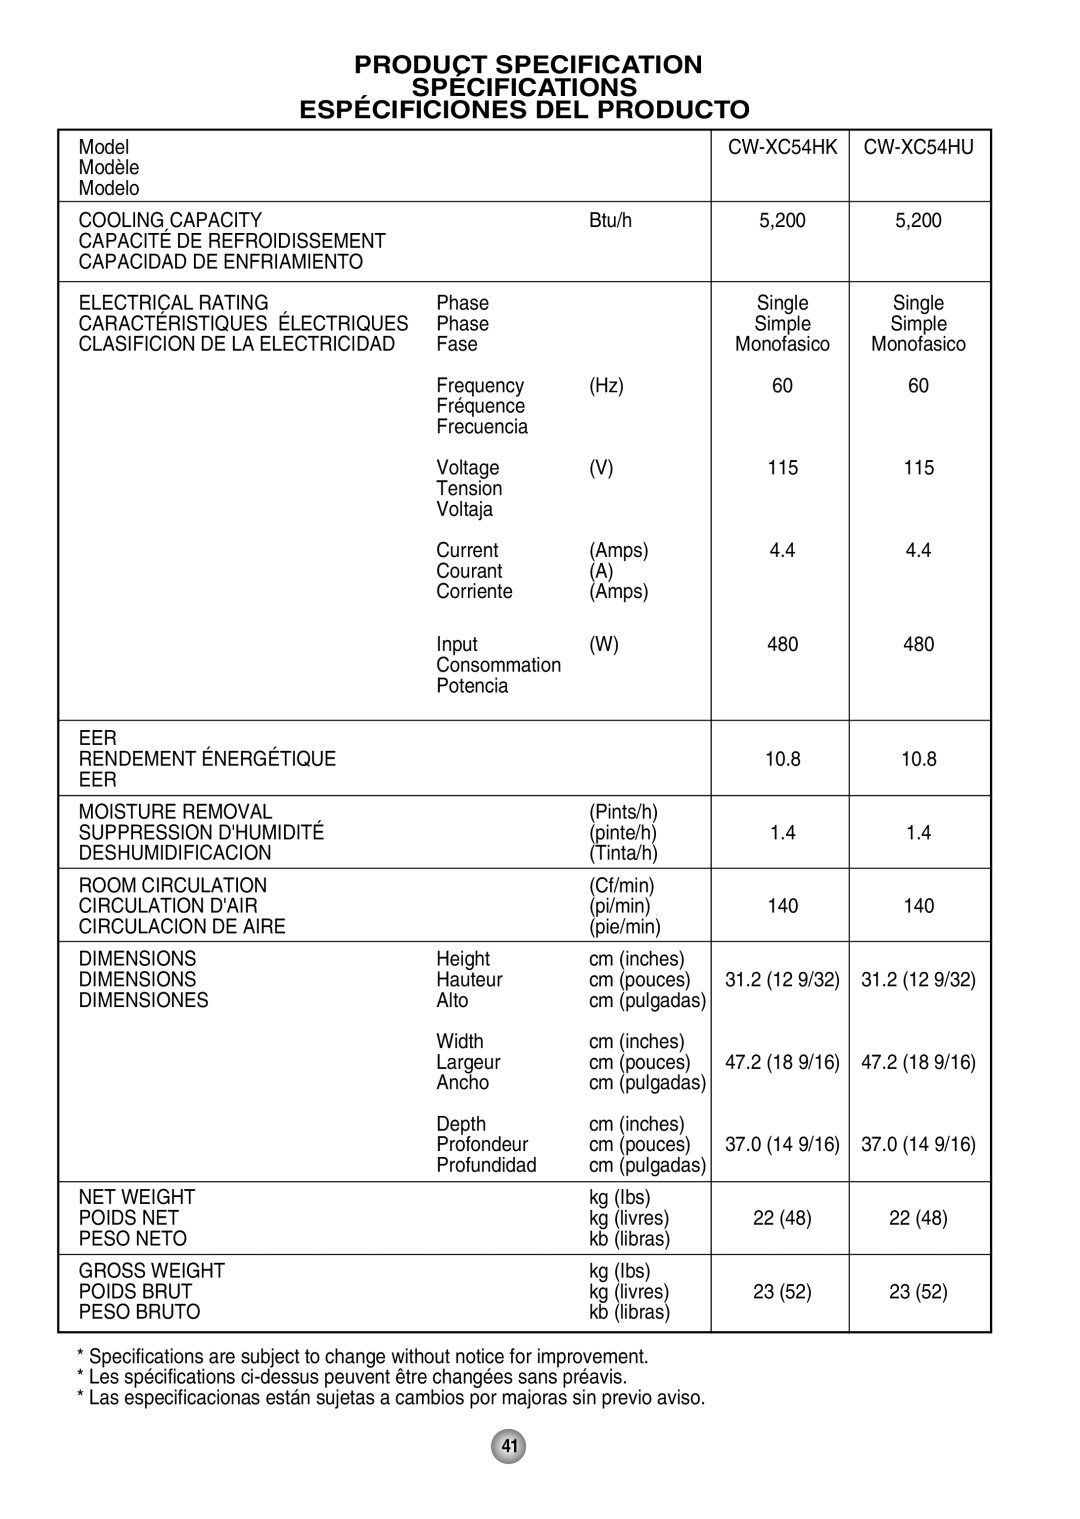 Panasonic CW-XC54HK, CW-XC54HU manual Product Specification Spécifications Espécificiones Del Producto 